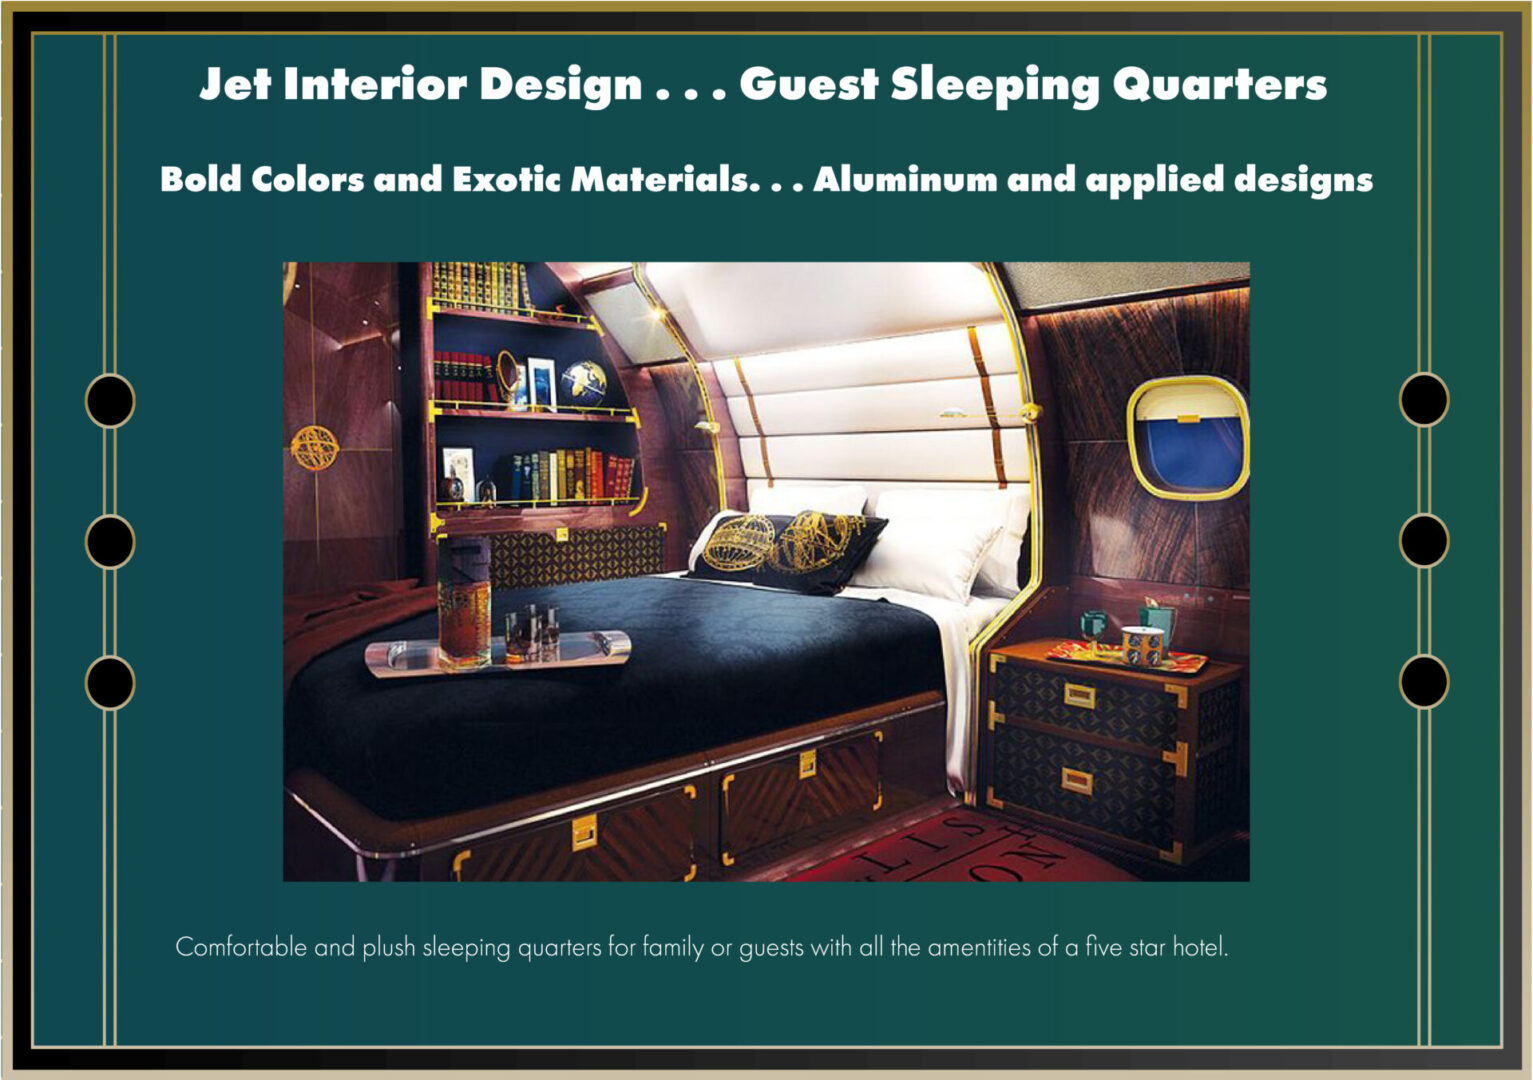 Jet Interior Design in Bold Colors using Exotic Materials